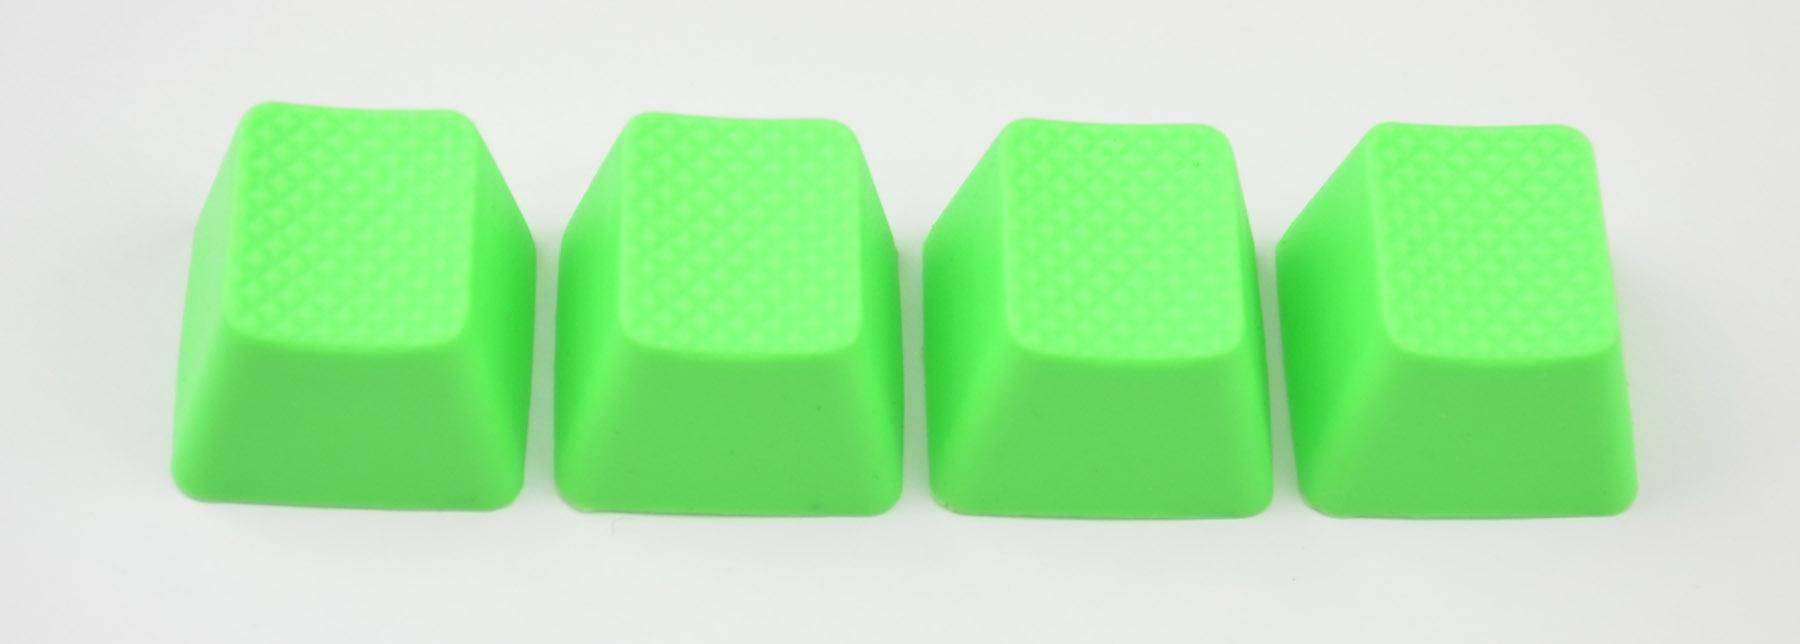 Tai-Hao 4 Key TPR Blank Rubber Keycap Set Neon Green Row 4 MK7K5G1IUG |38551|